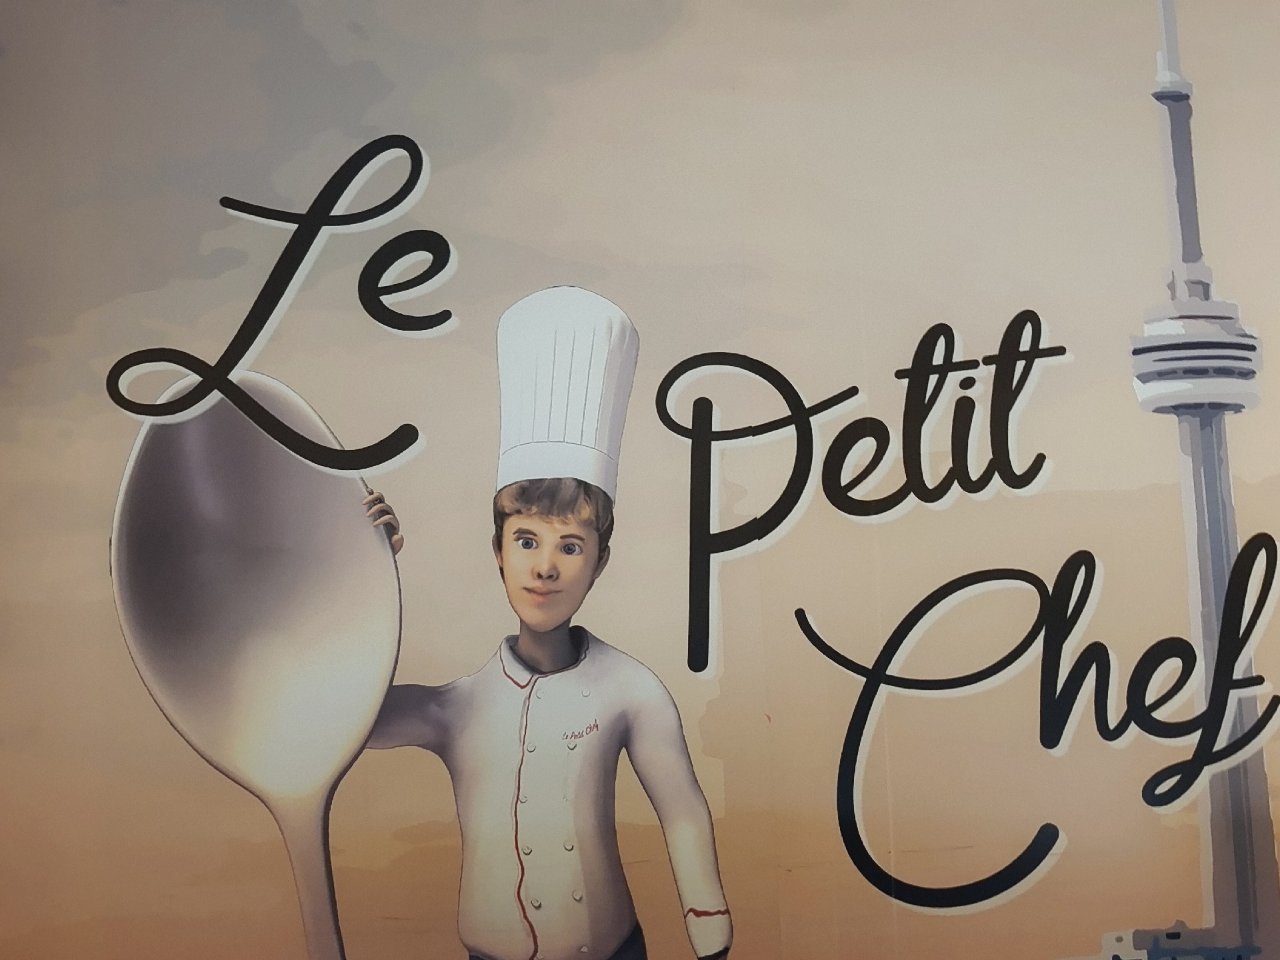 Le Petit Chef🍽️沉浸式全息...